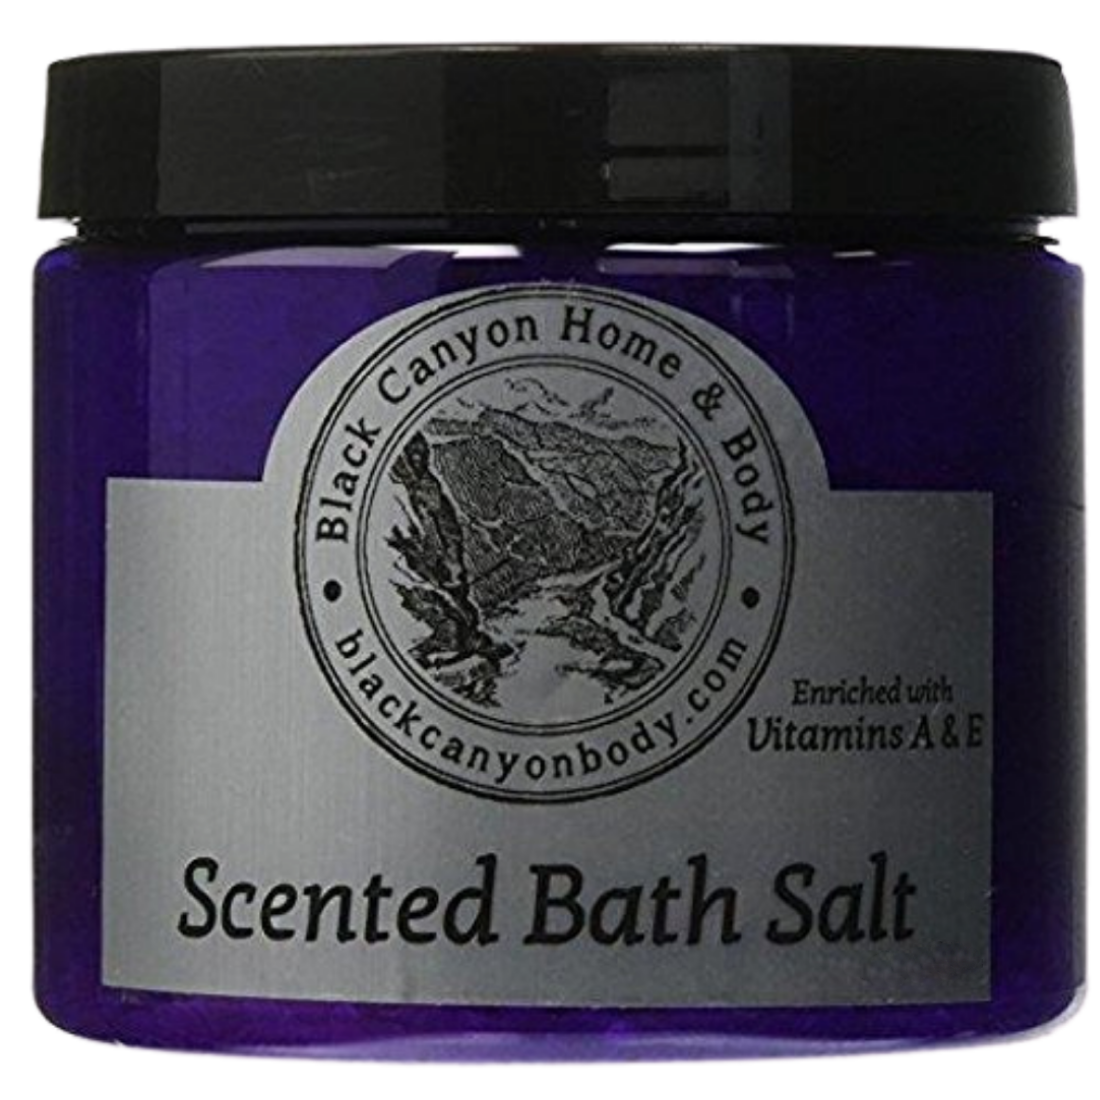 Black Canyon Berry Passion Scented Epsom Salt Bath Soak